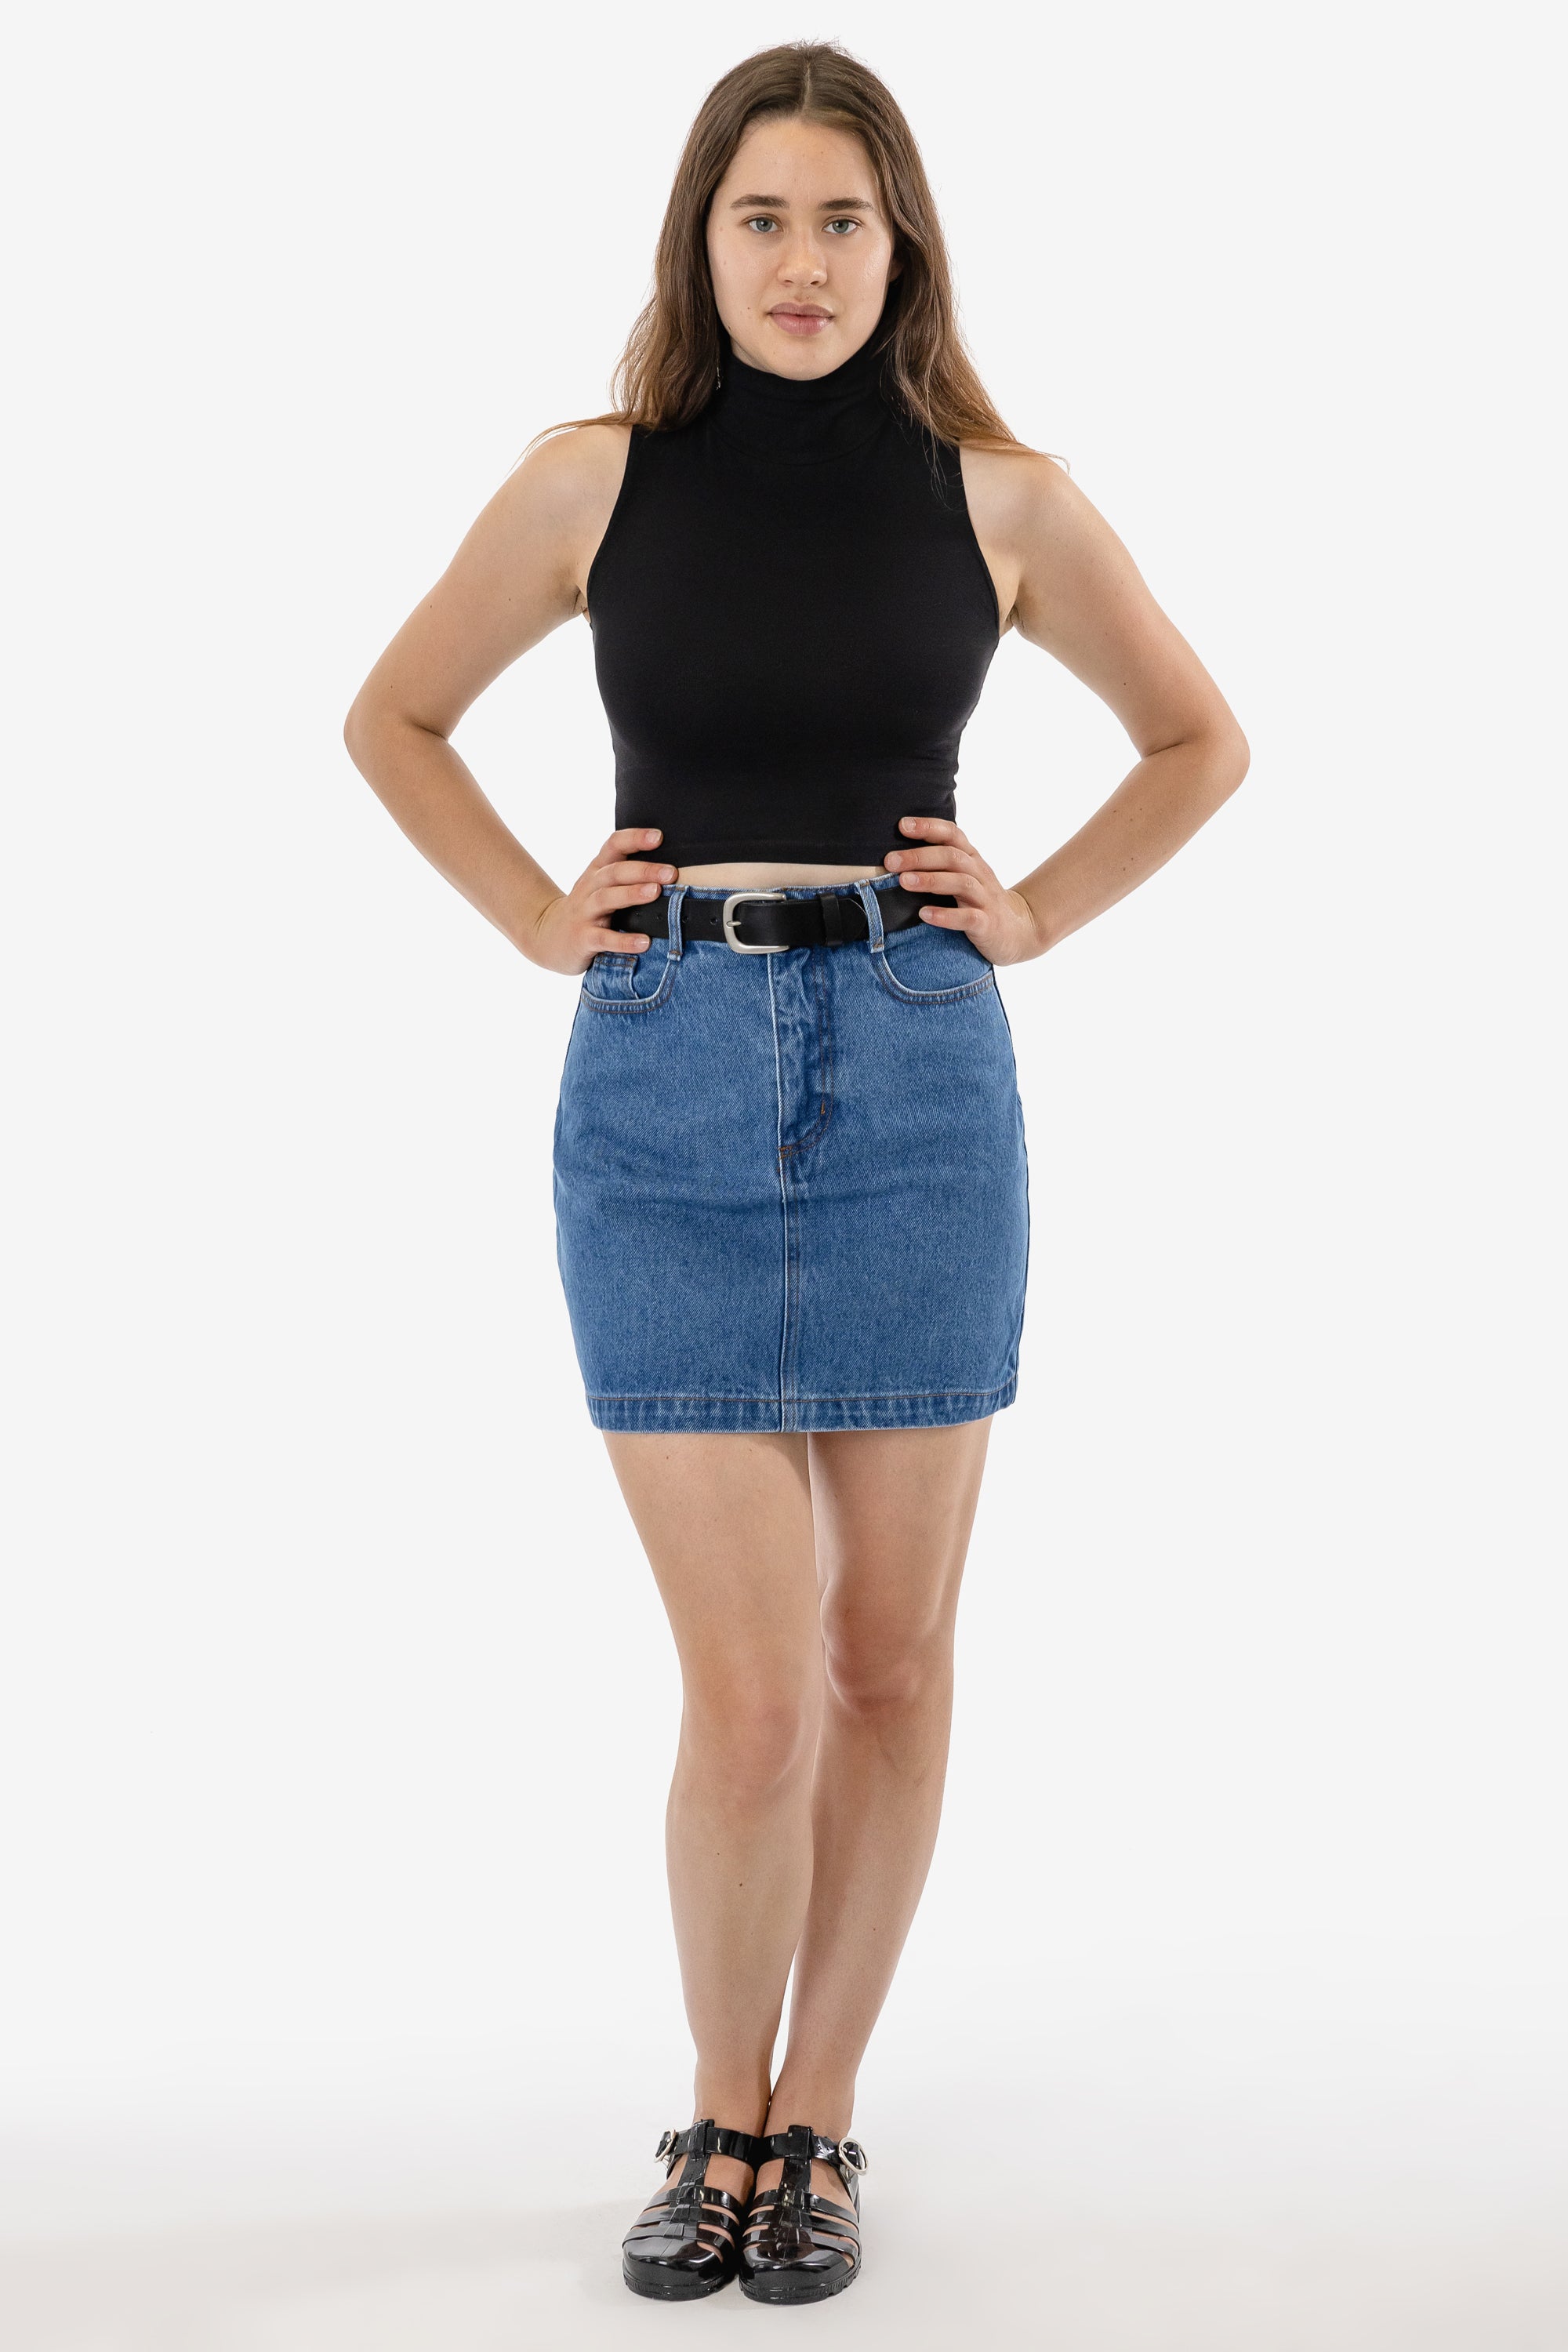 St.lucia Scoop Neckline Bikini Top With Mesh Mini Skirt. -  Canada